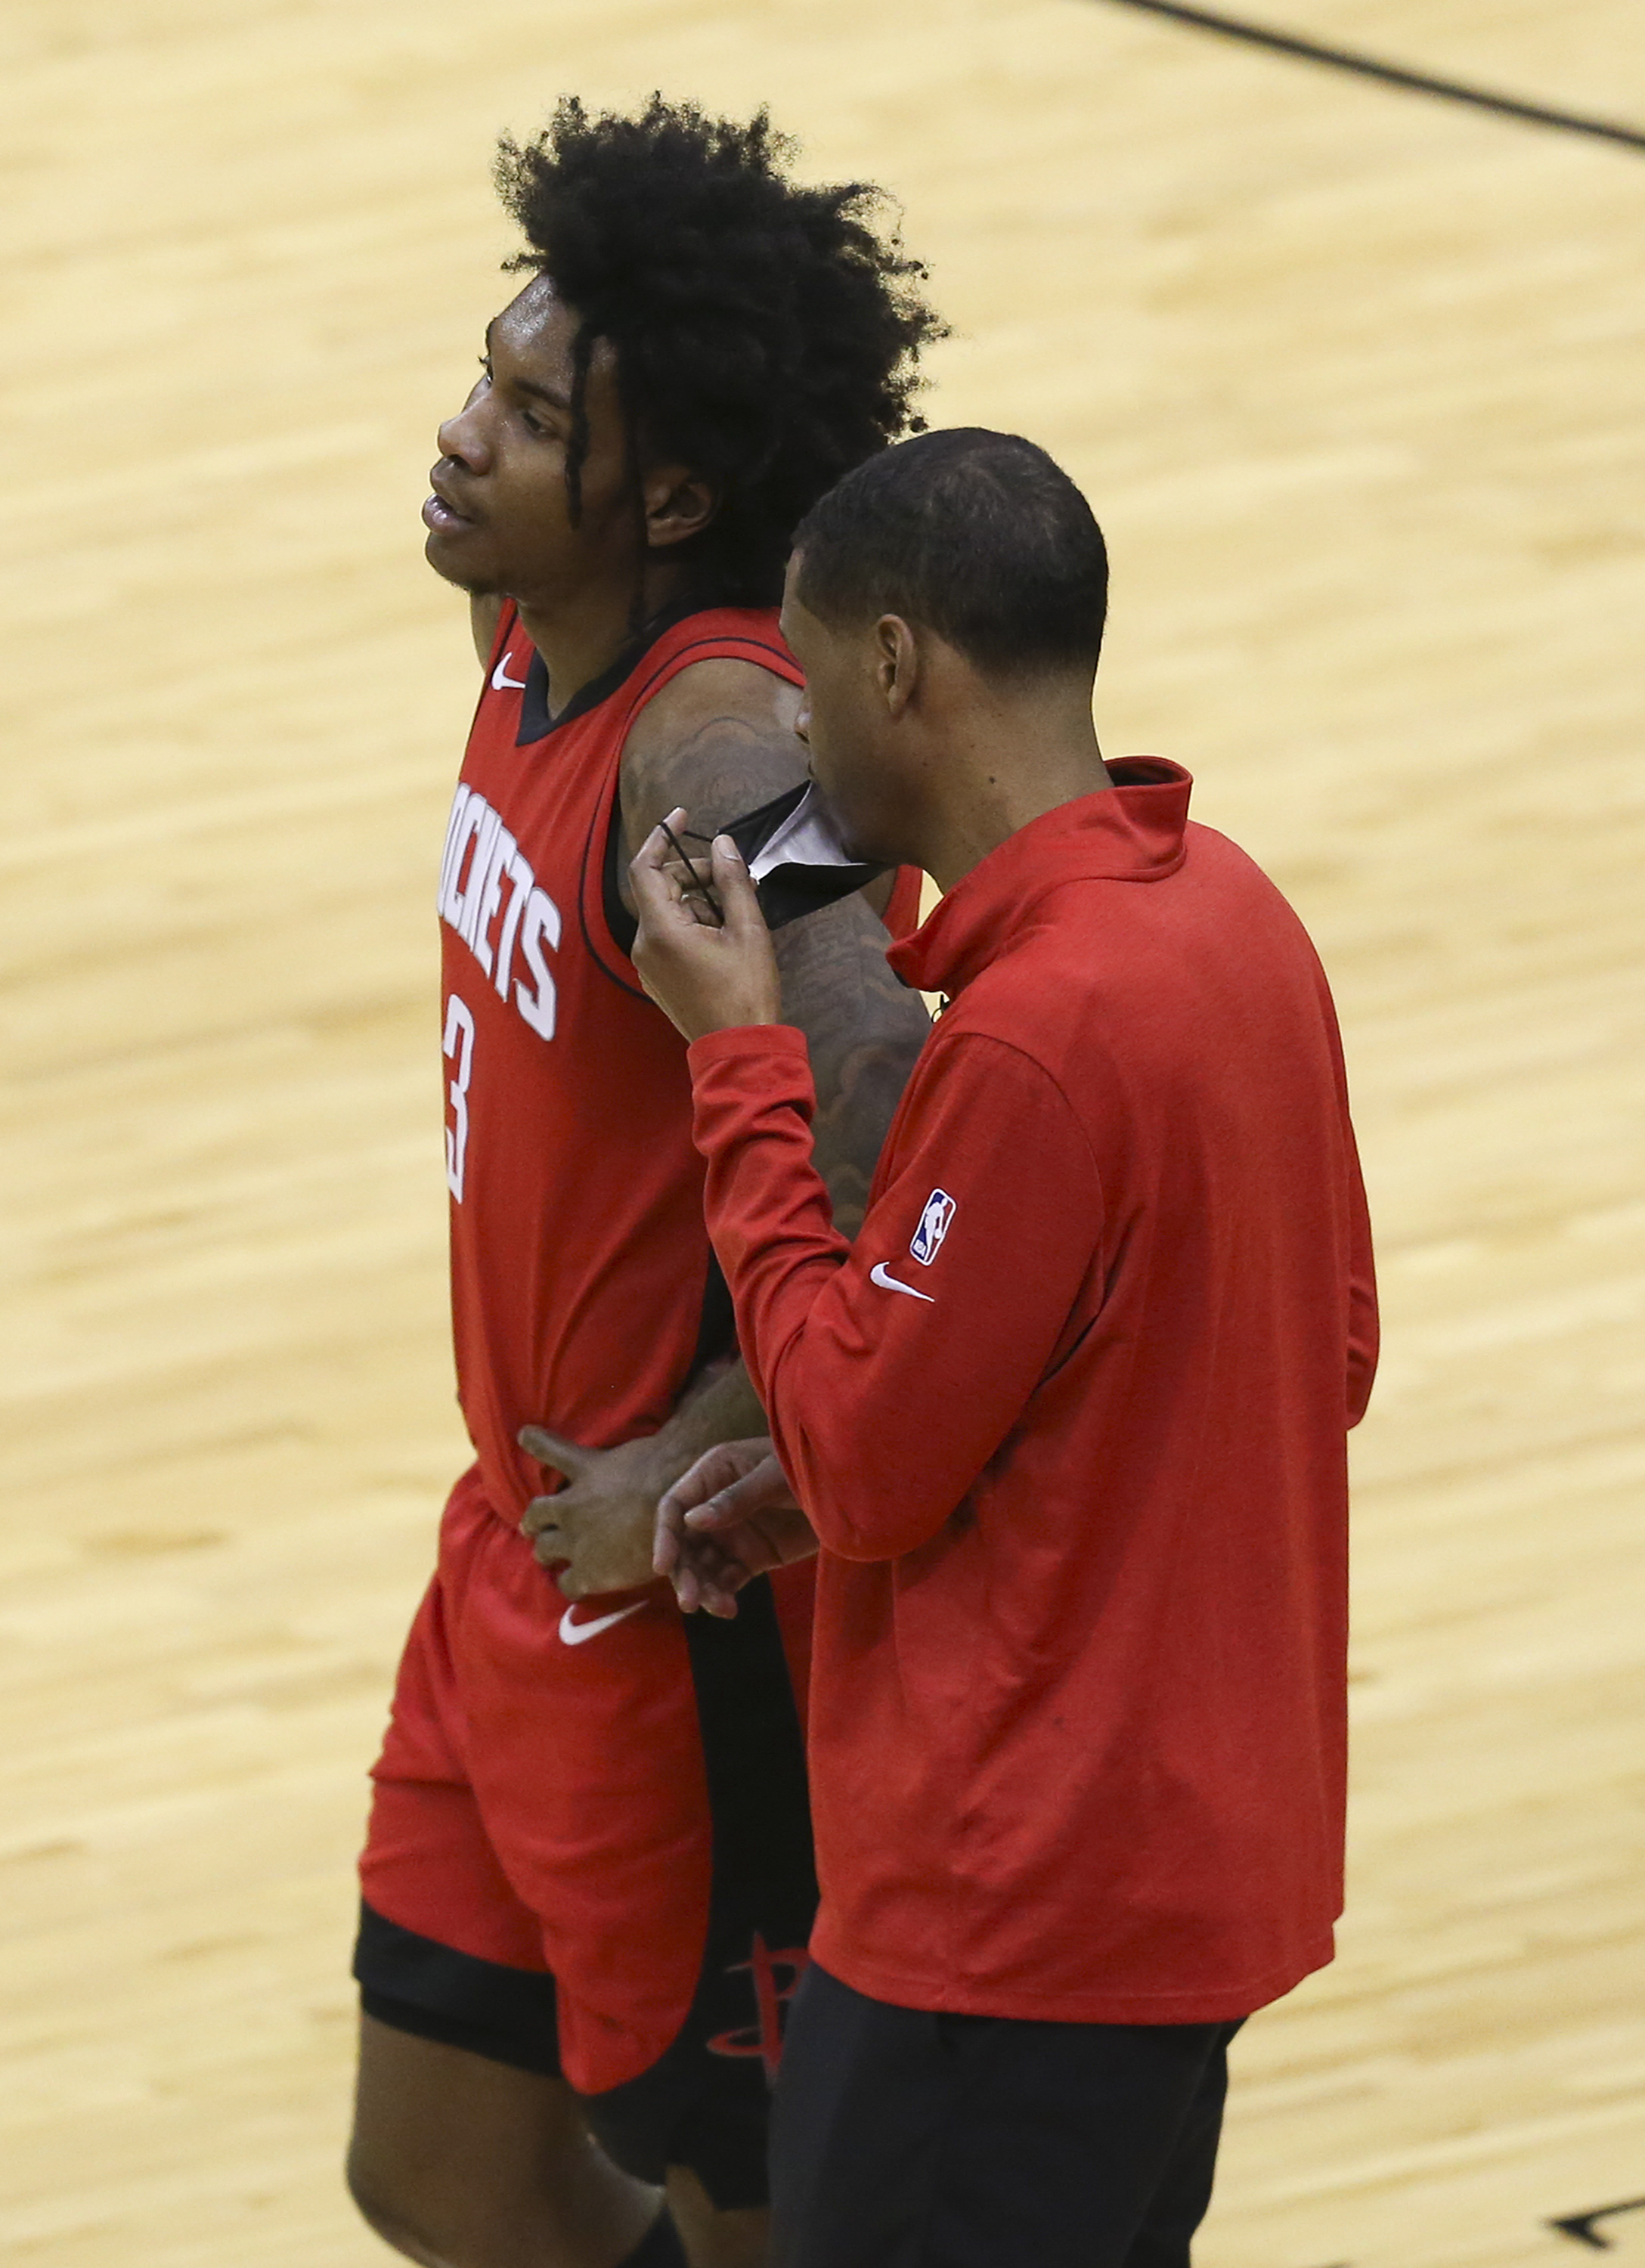 NBA: Minnesota Timberwolves at Houston Rockets